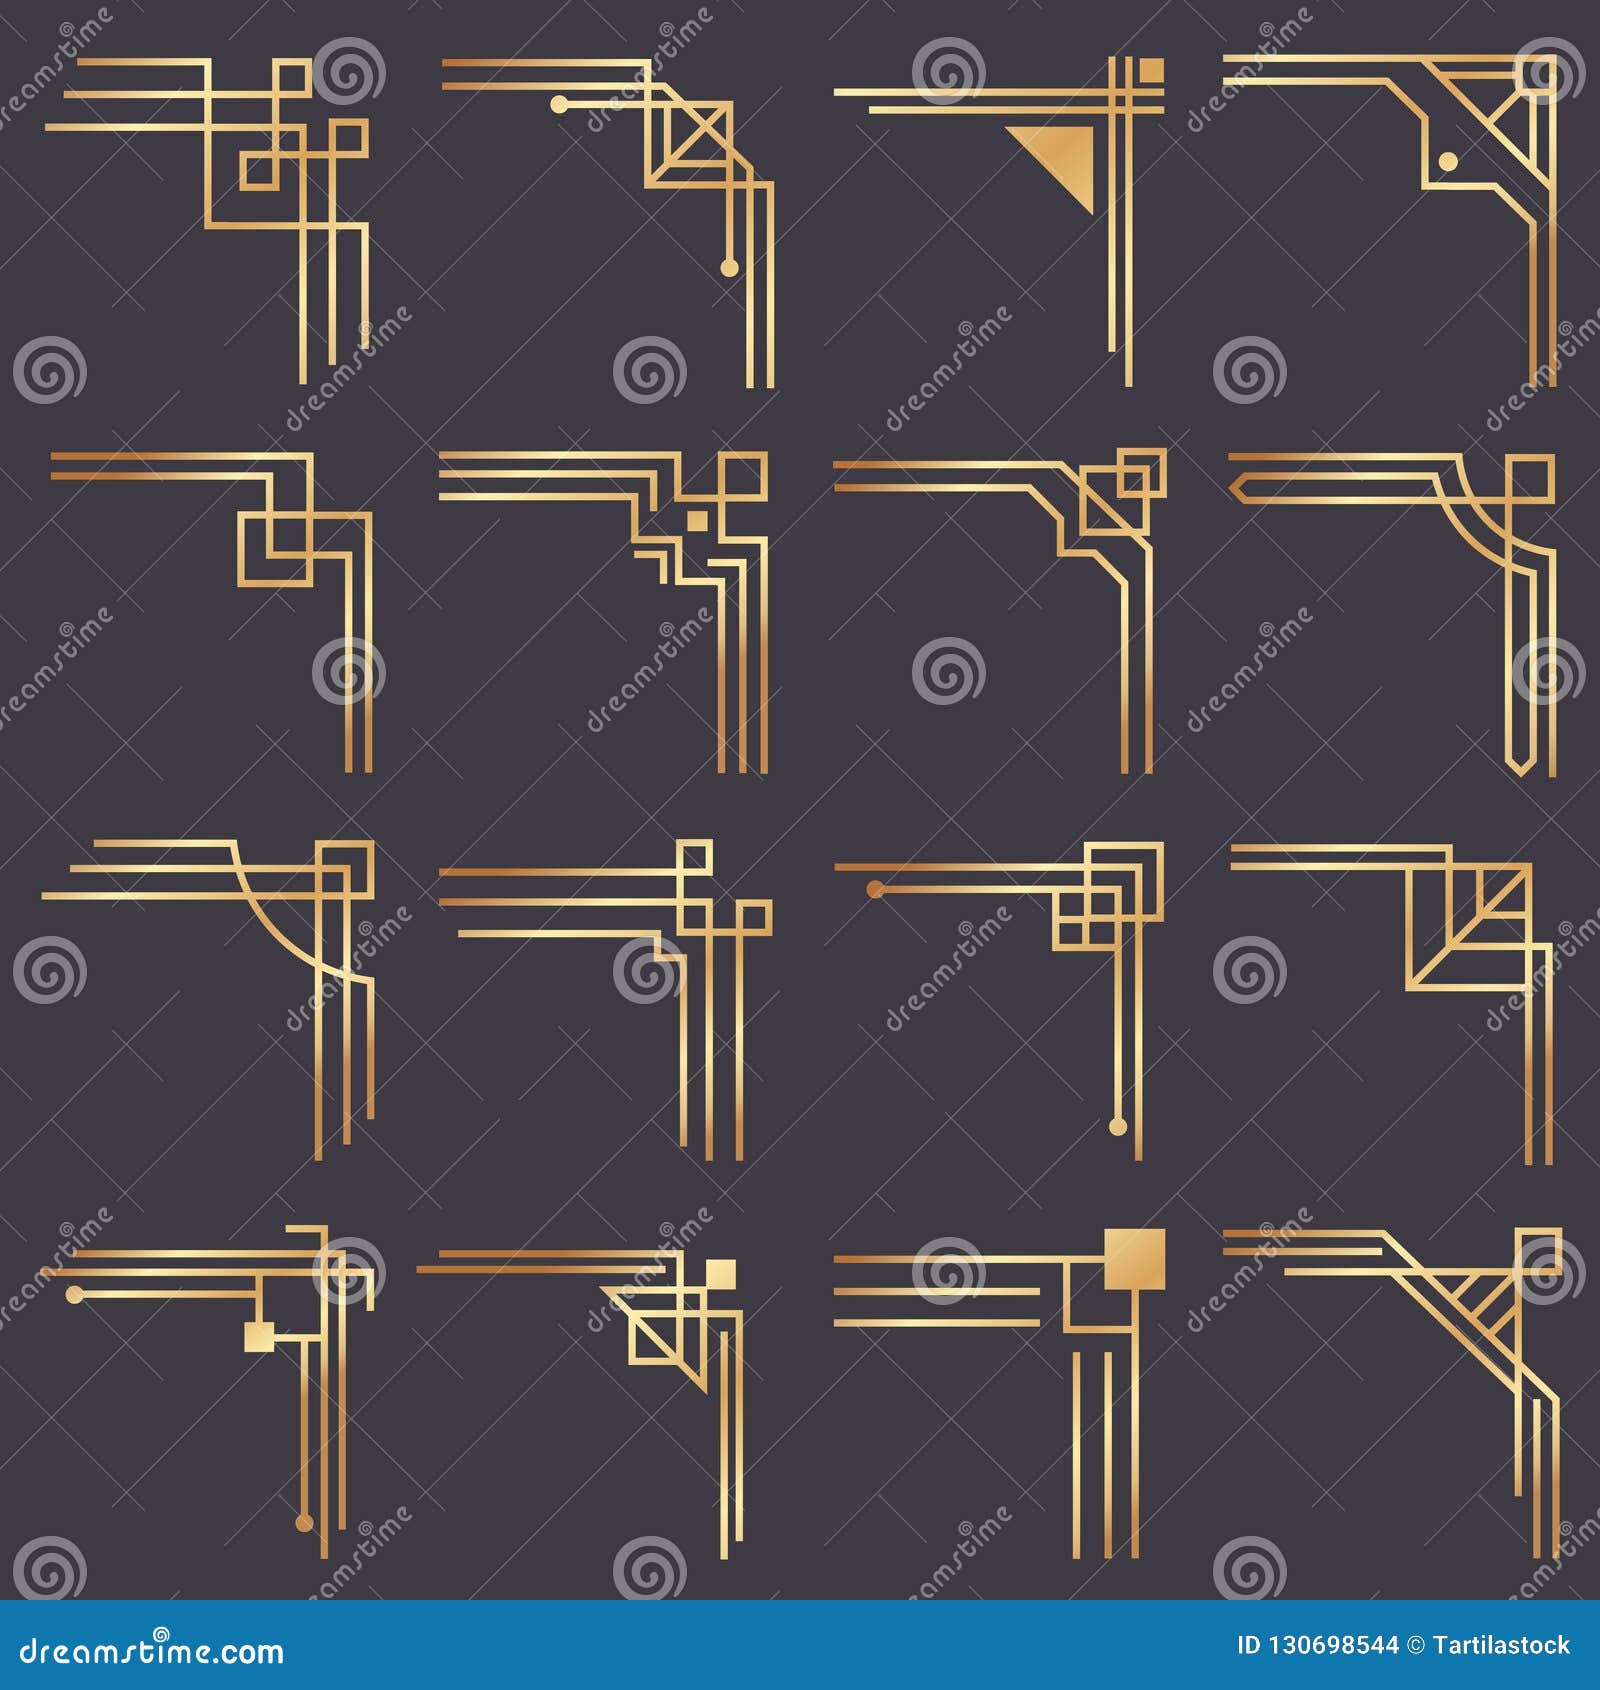 art deco corner. modern graphic corners for vintage gold pattern border. golden 1920s fashion decorative lines frame